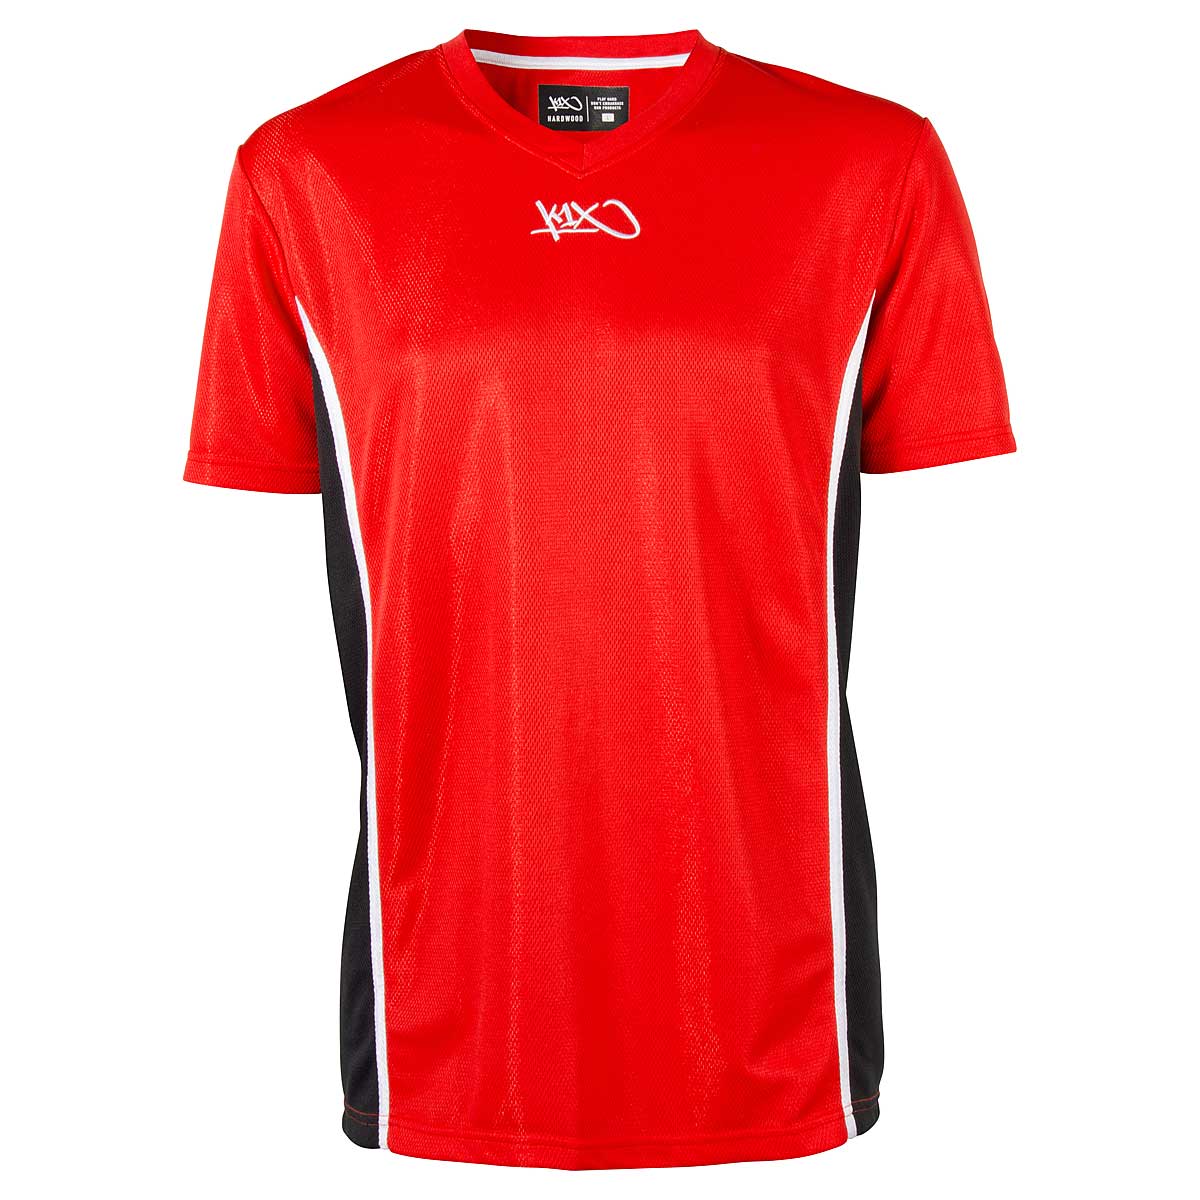 K1X K1X Hardwood League Uniform Shooting Shirt Mk2, Red/Black/White